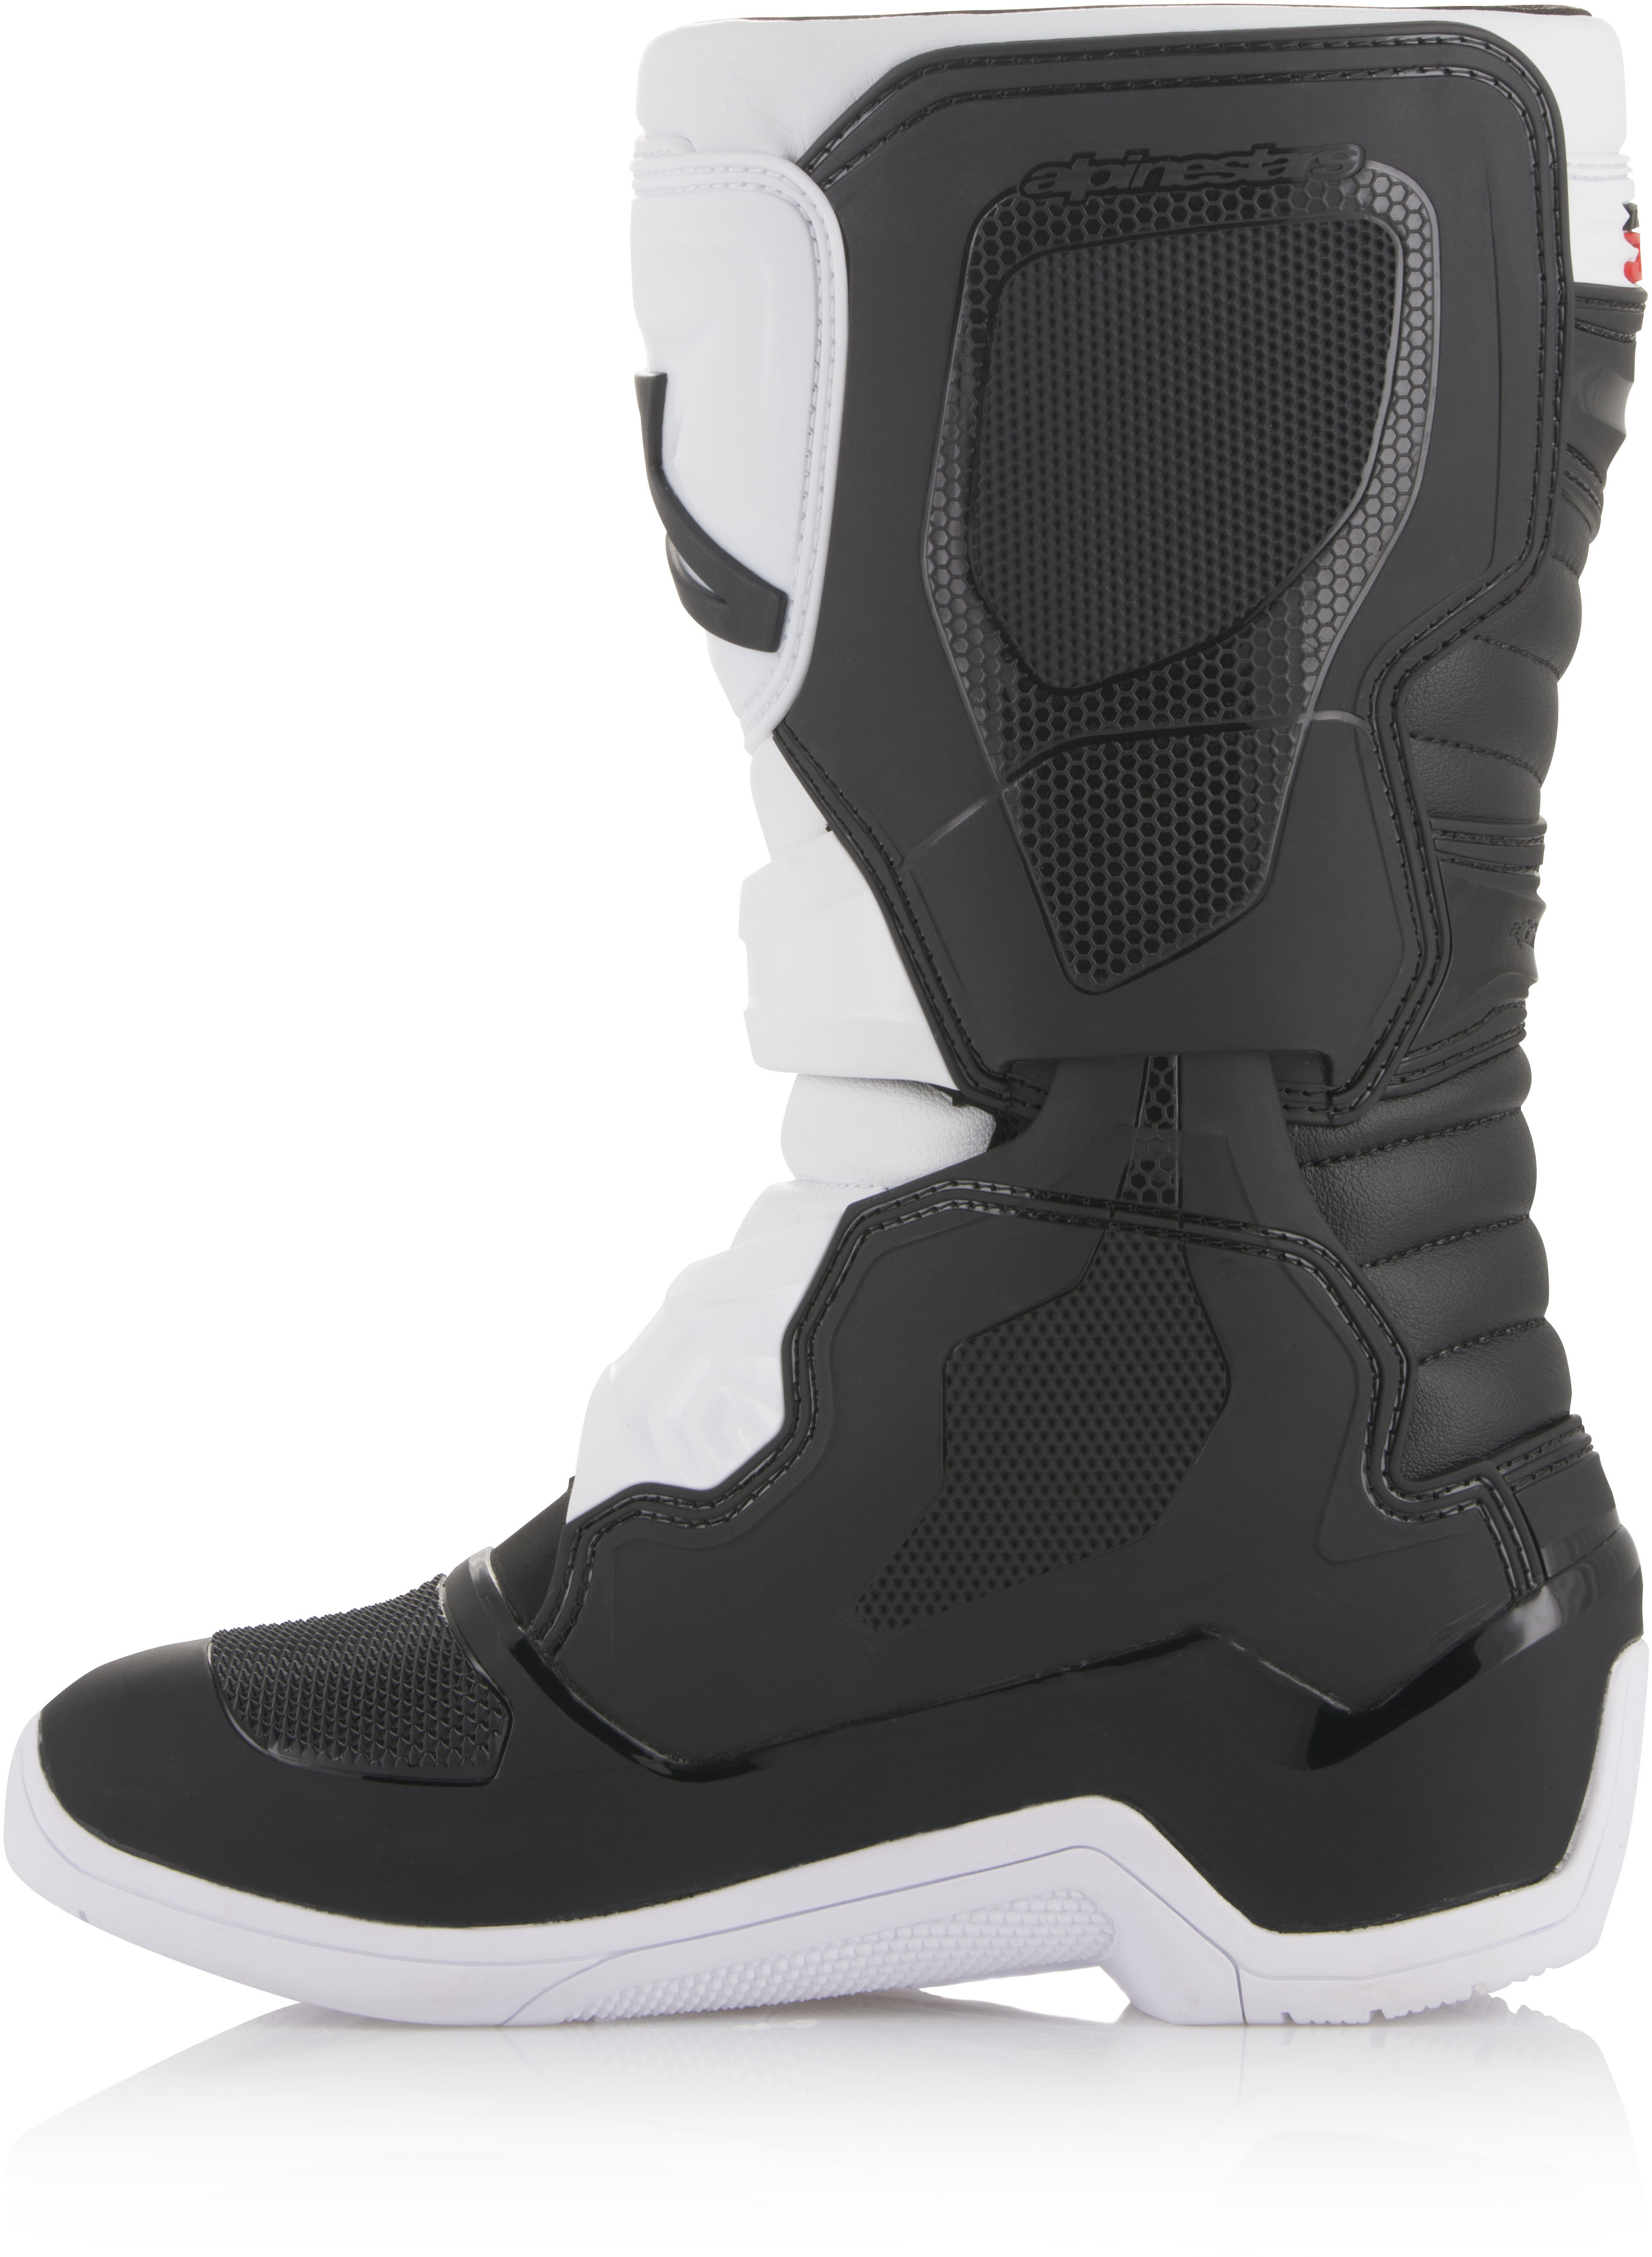 Tech 3S Boots Black/White Size 2 - Click Image to Close